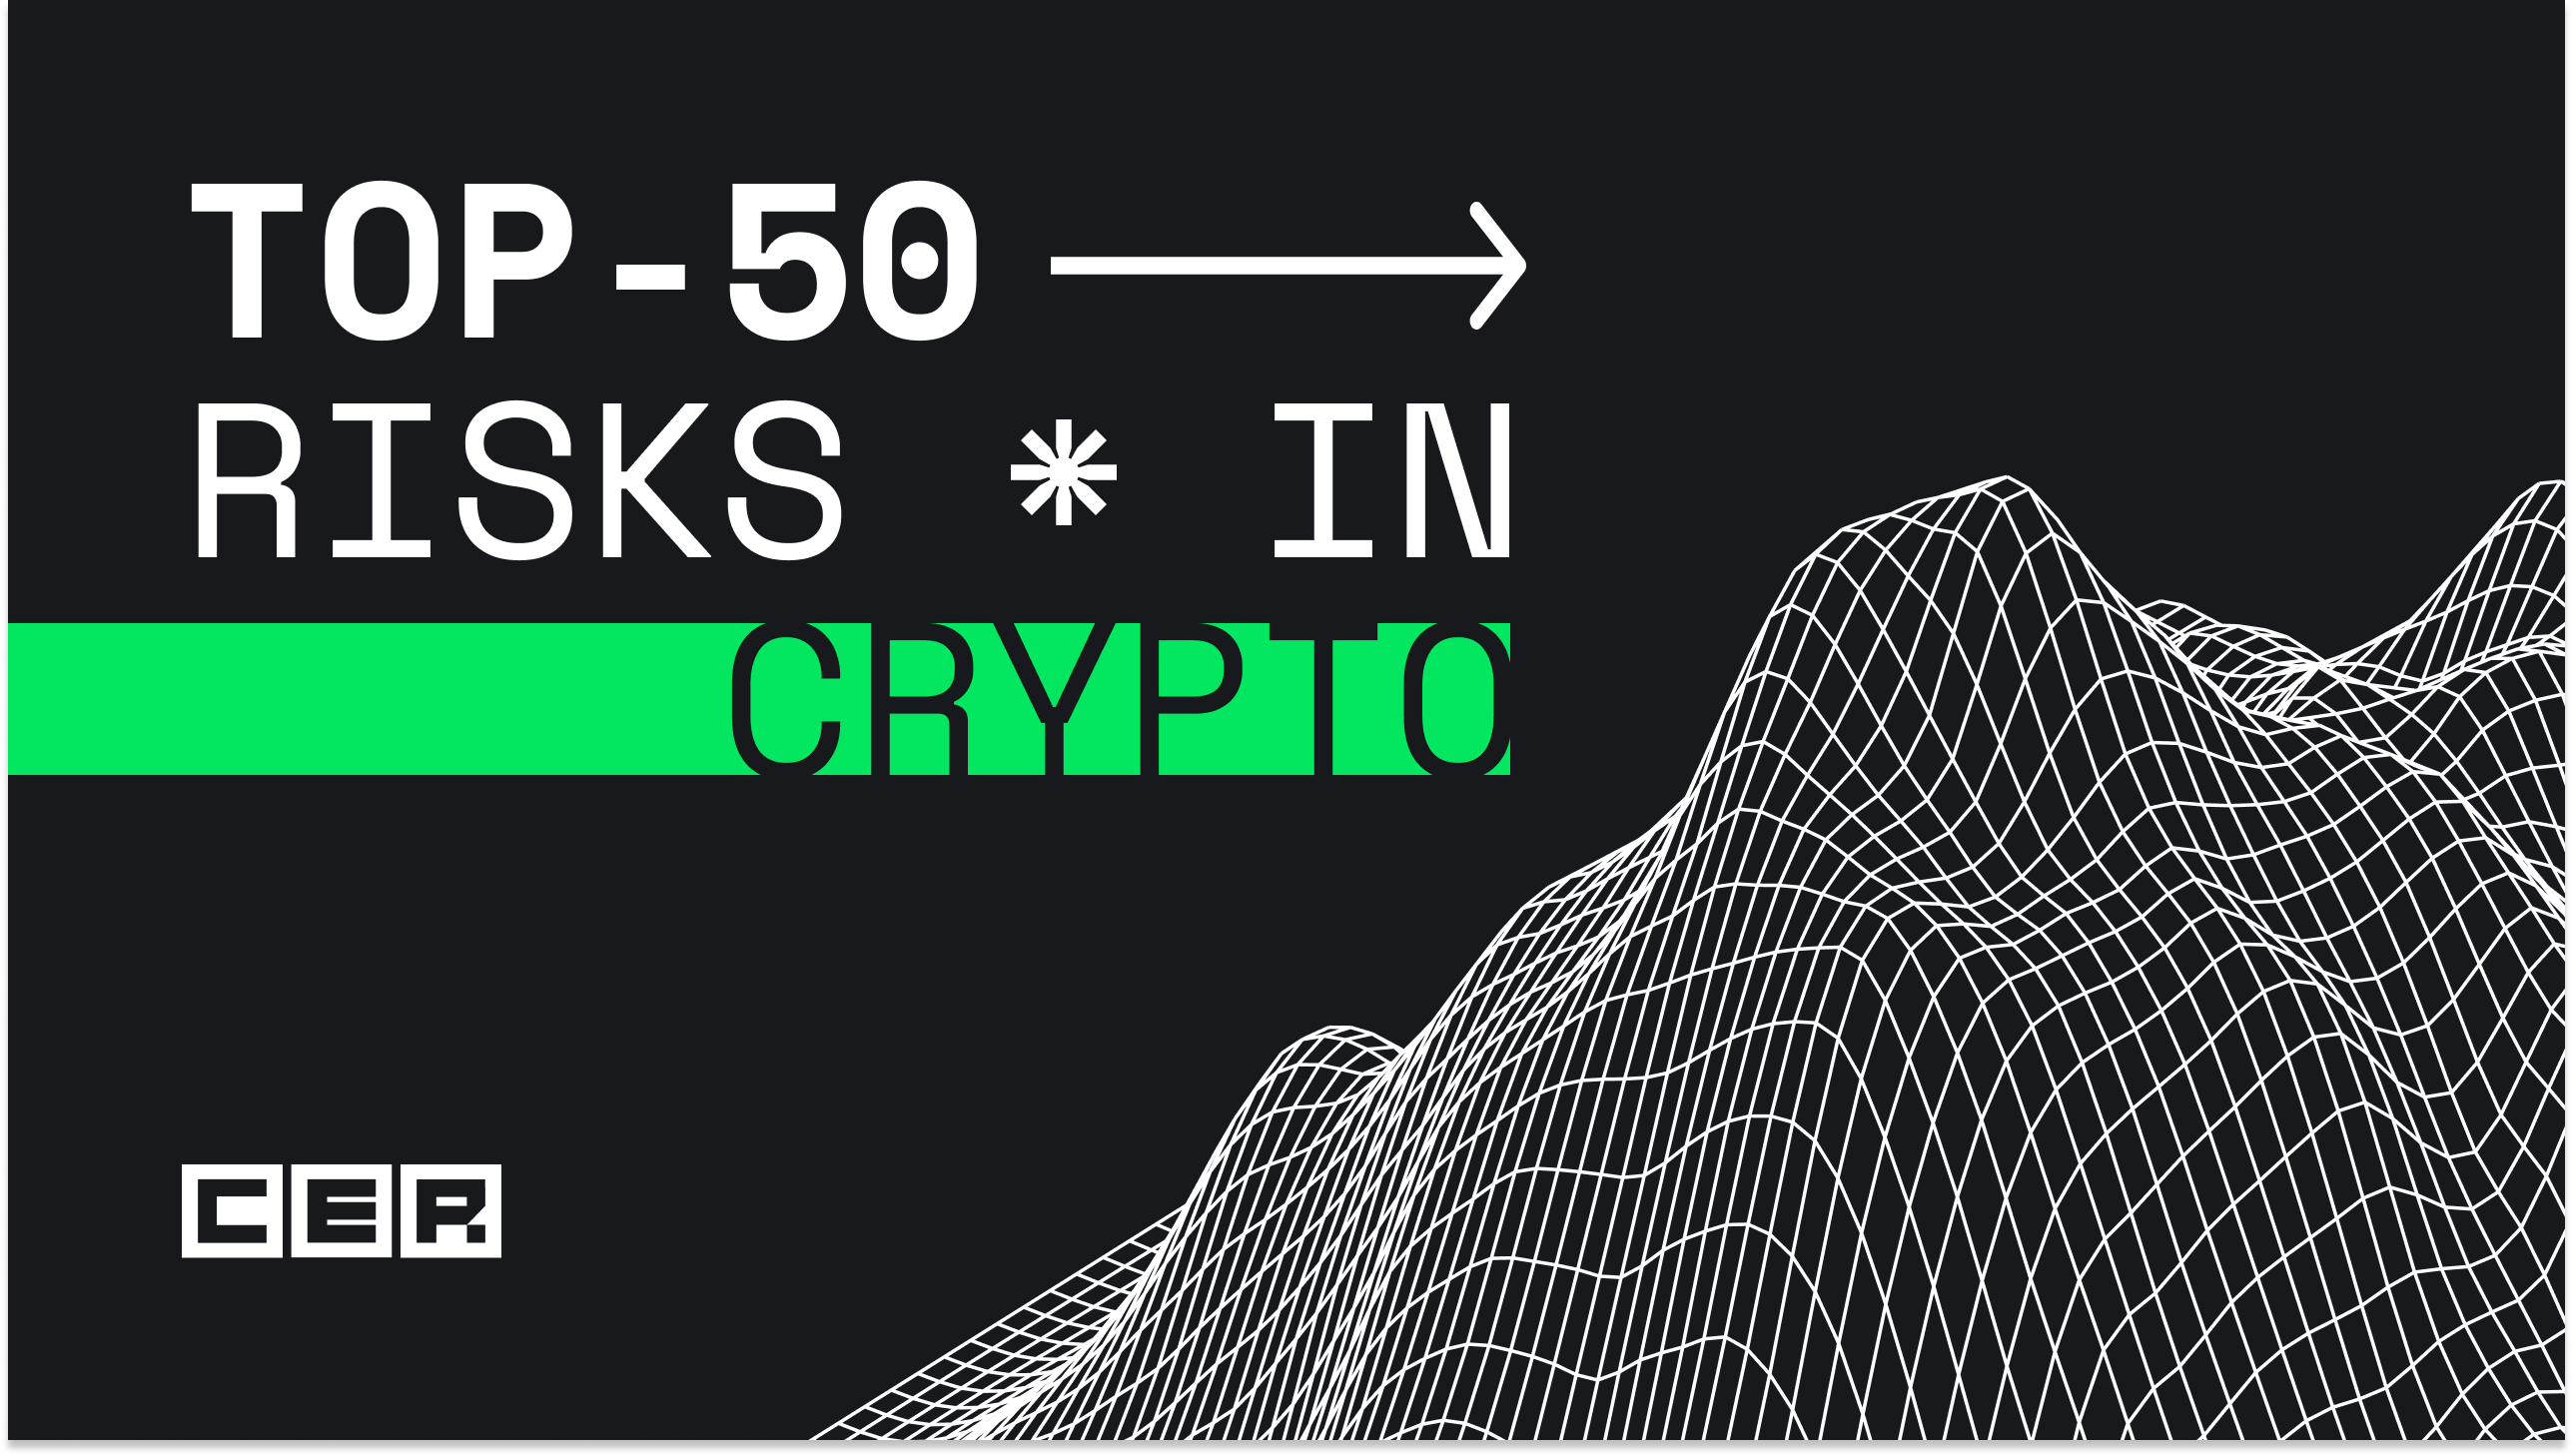 Top-50 risks in cryptoimage